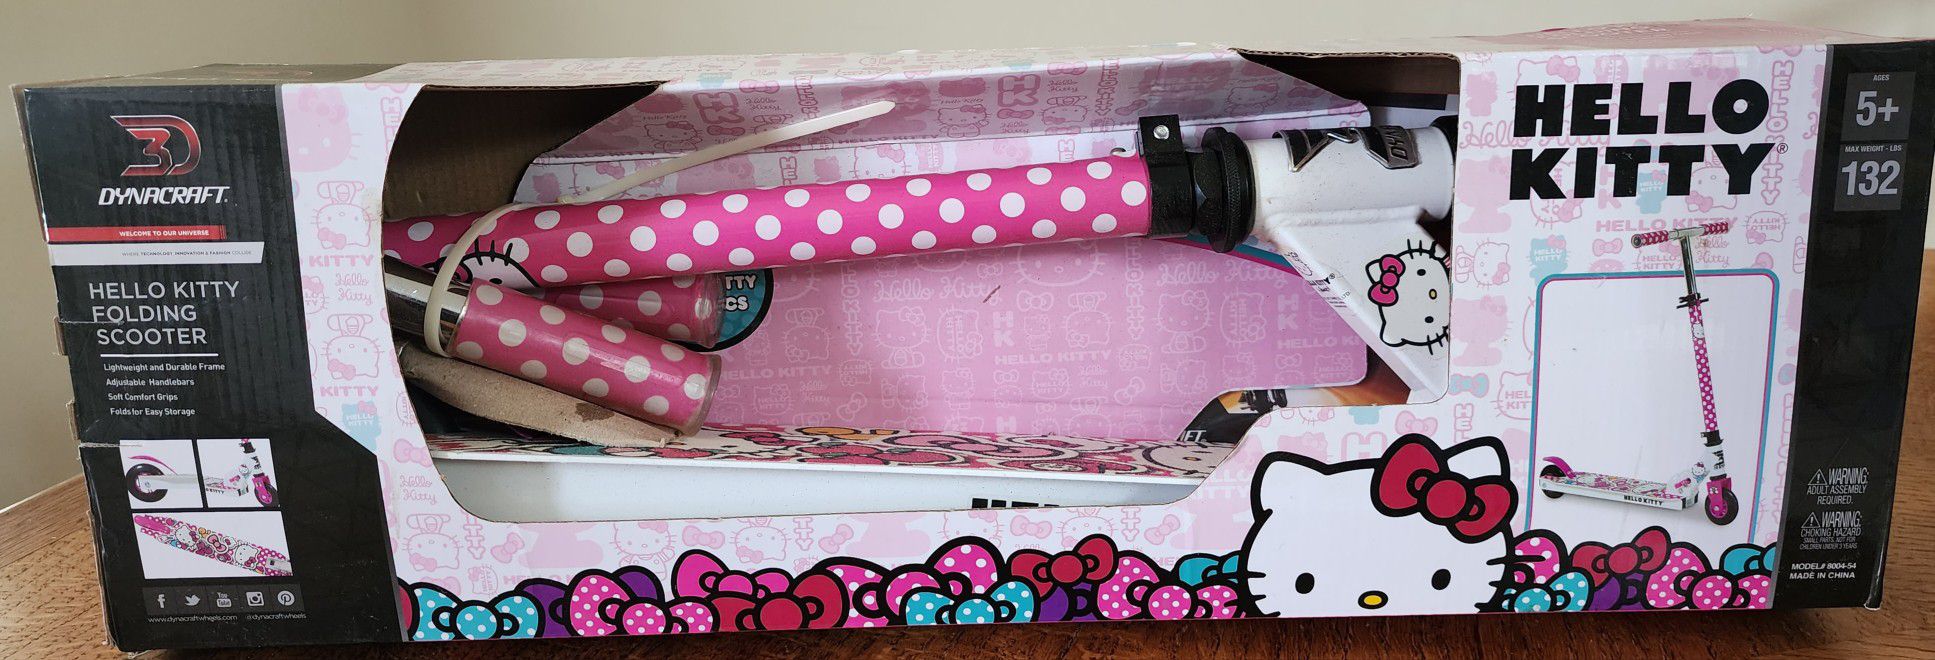 Girls' 2 Wheeled Hello Kitty Folding Kick Scooter by Dynacraft 